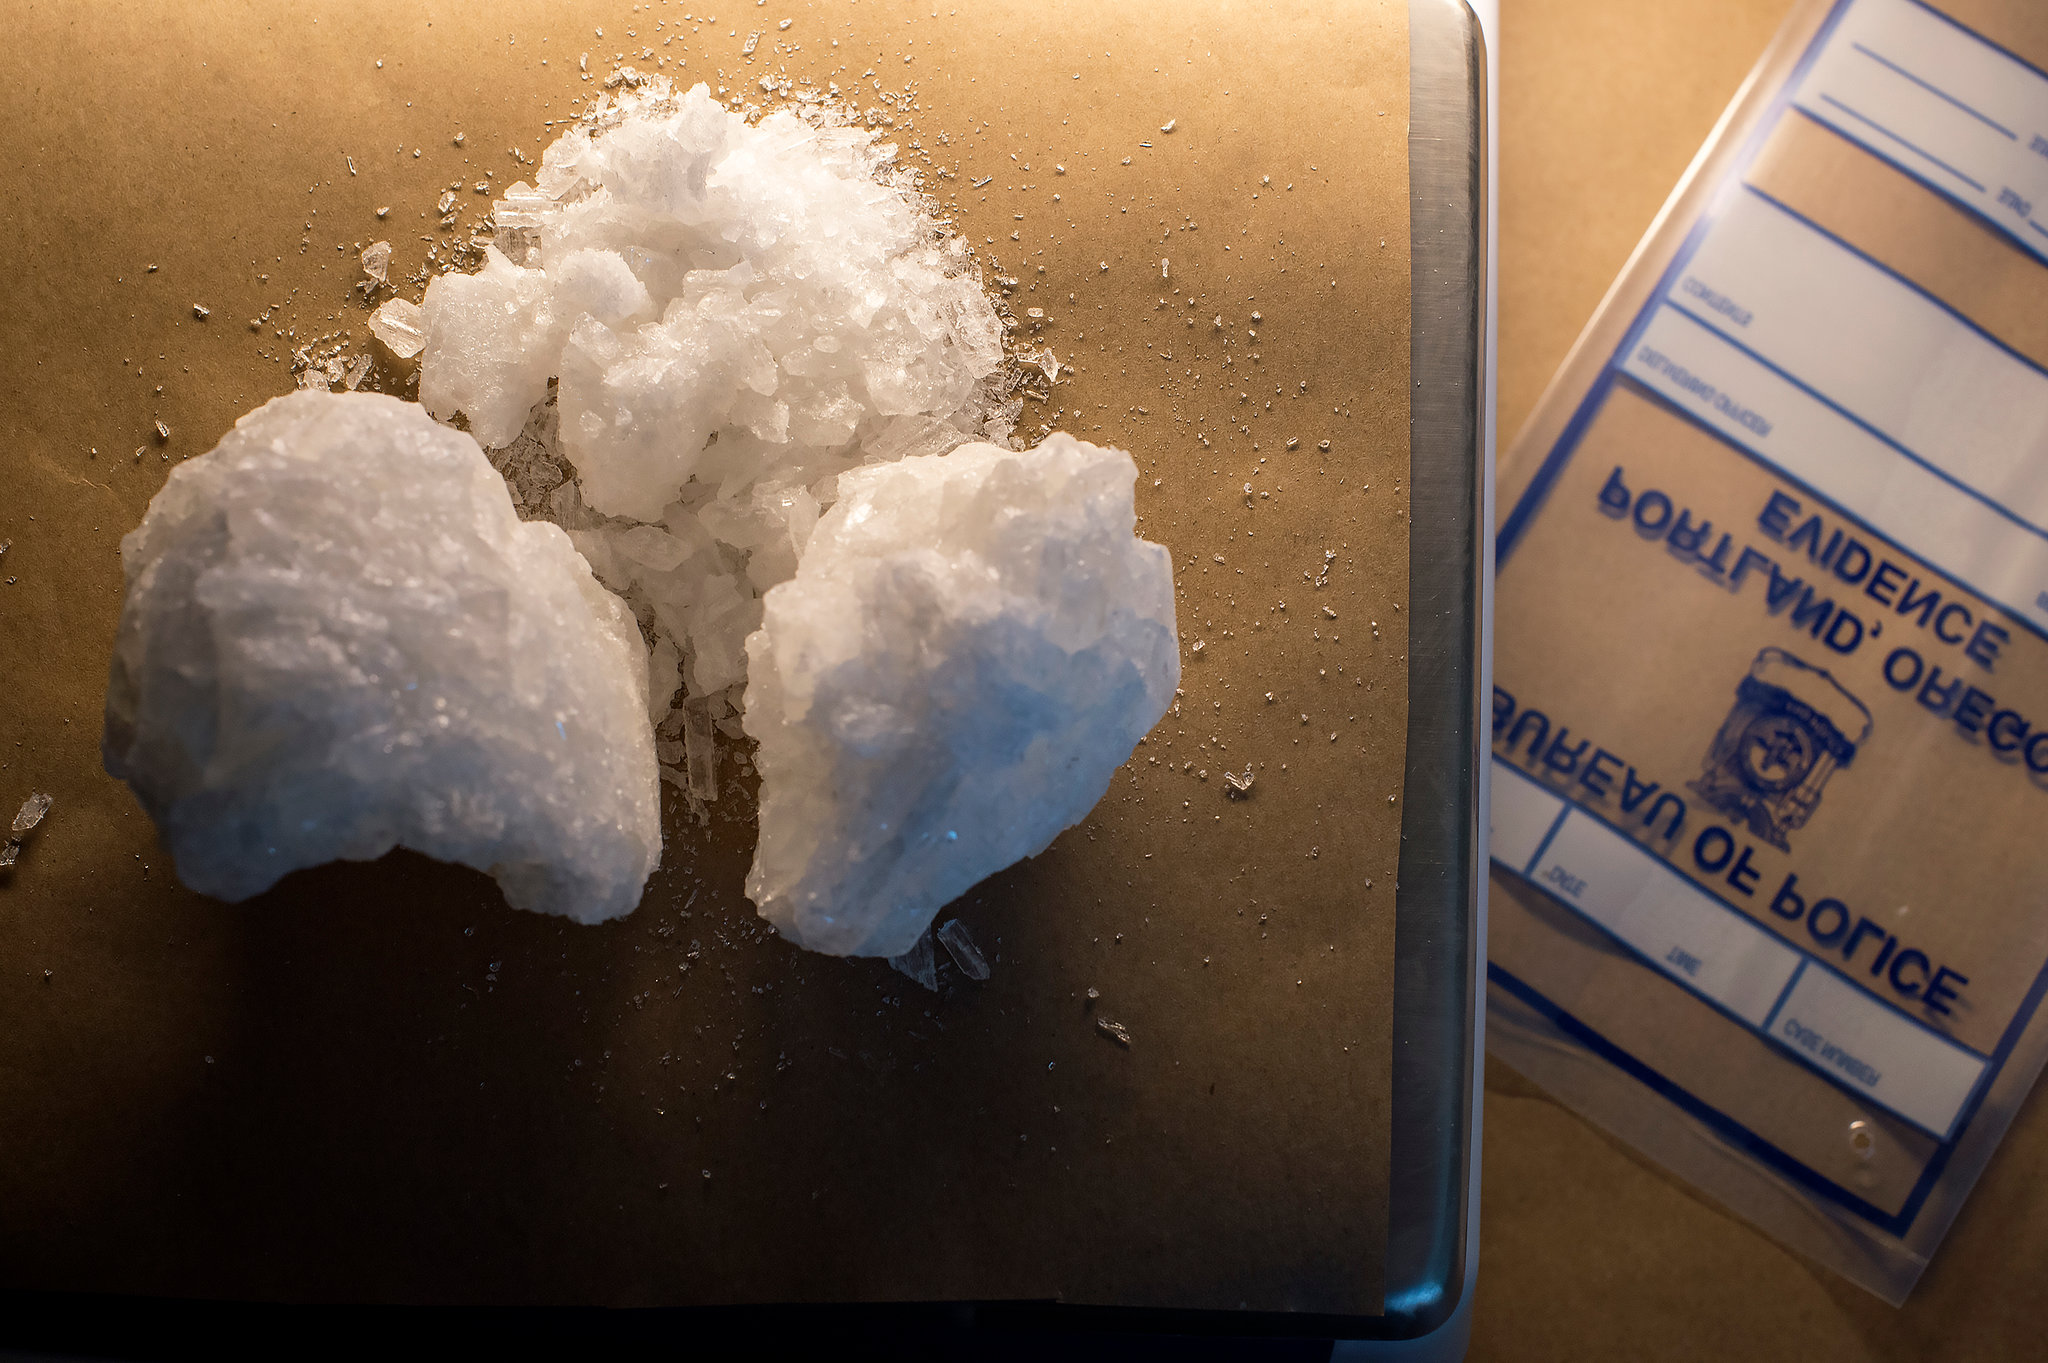 street heroin powdered milk other drugs